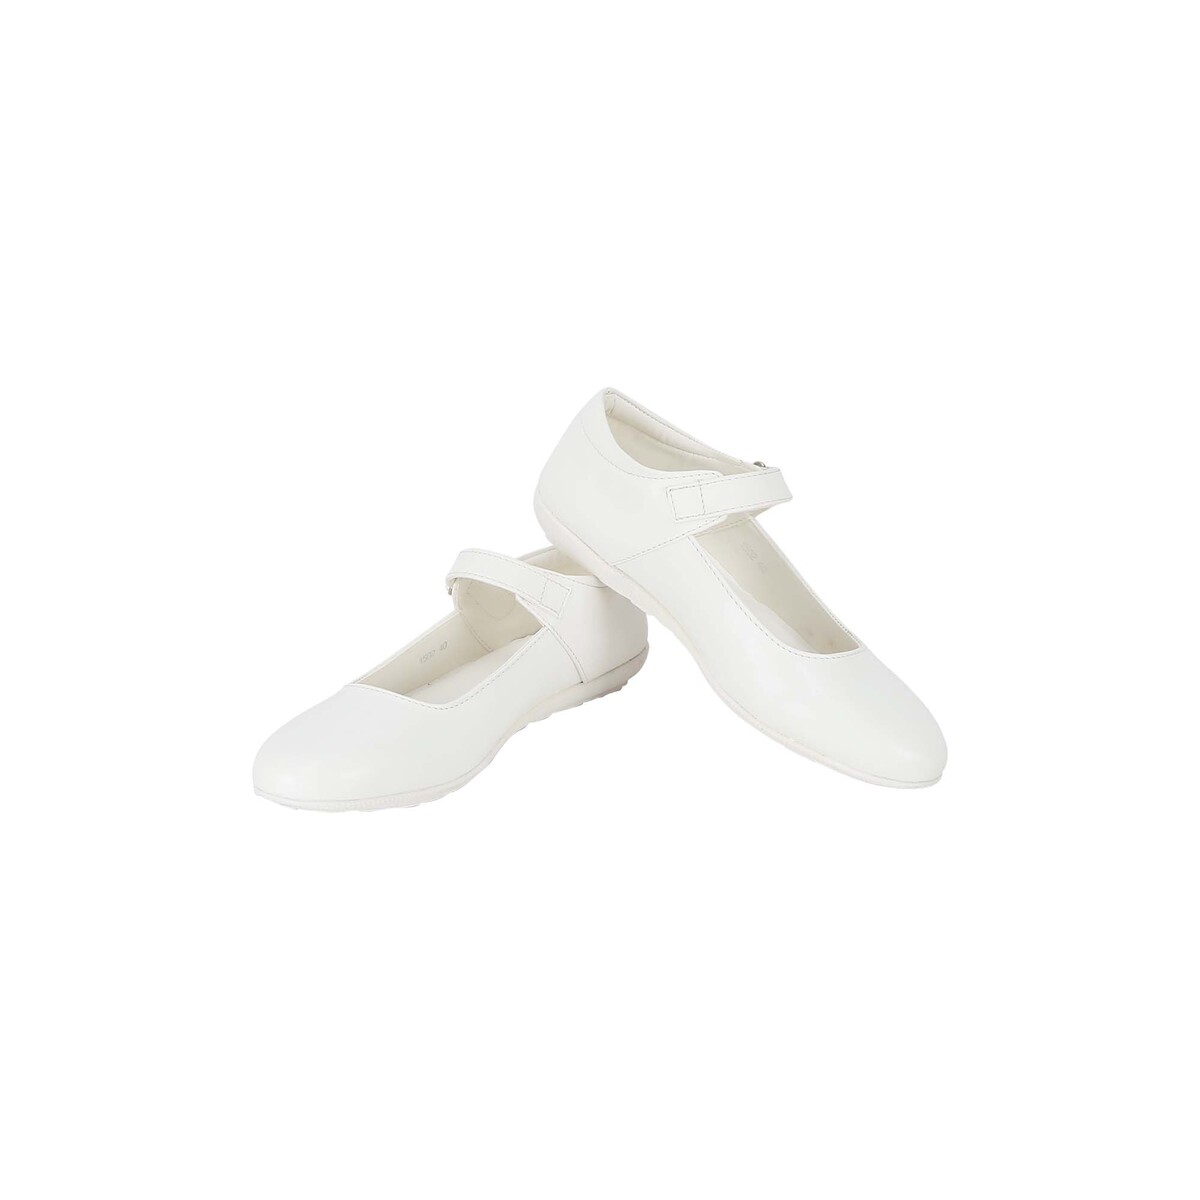 Lusso Bellini Girls School Shoes 26-35 1502 White 32